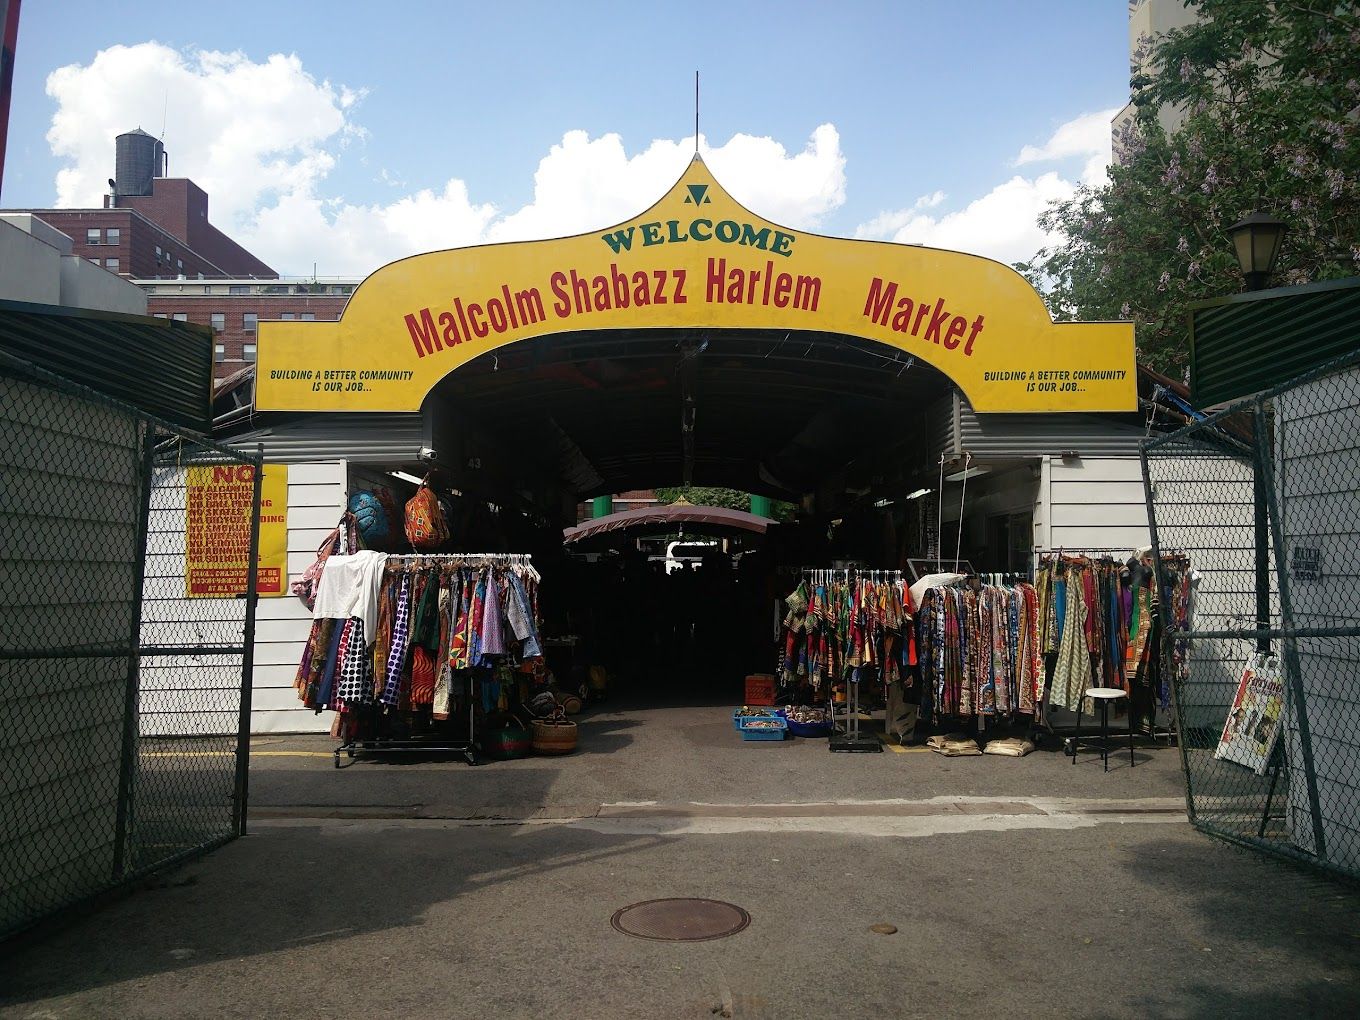 Malcolm Shabazz Harlem Market